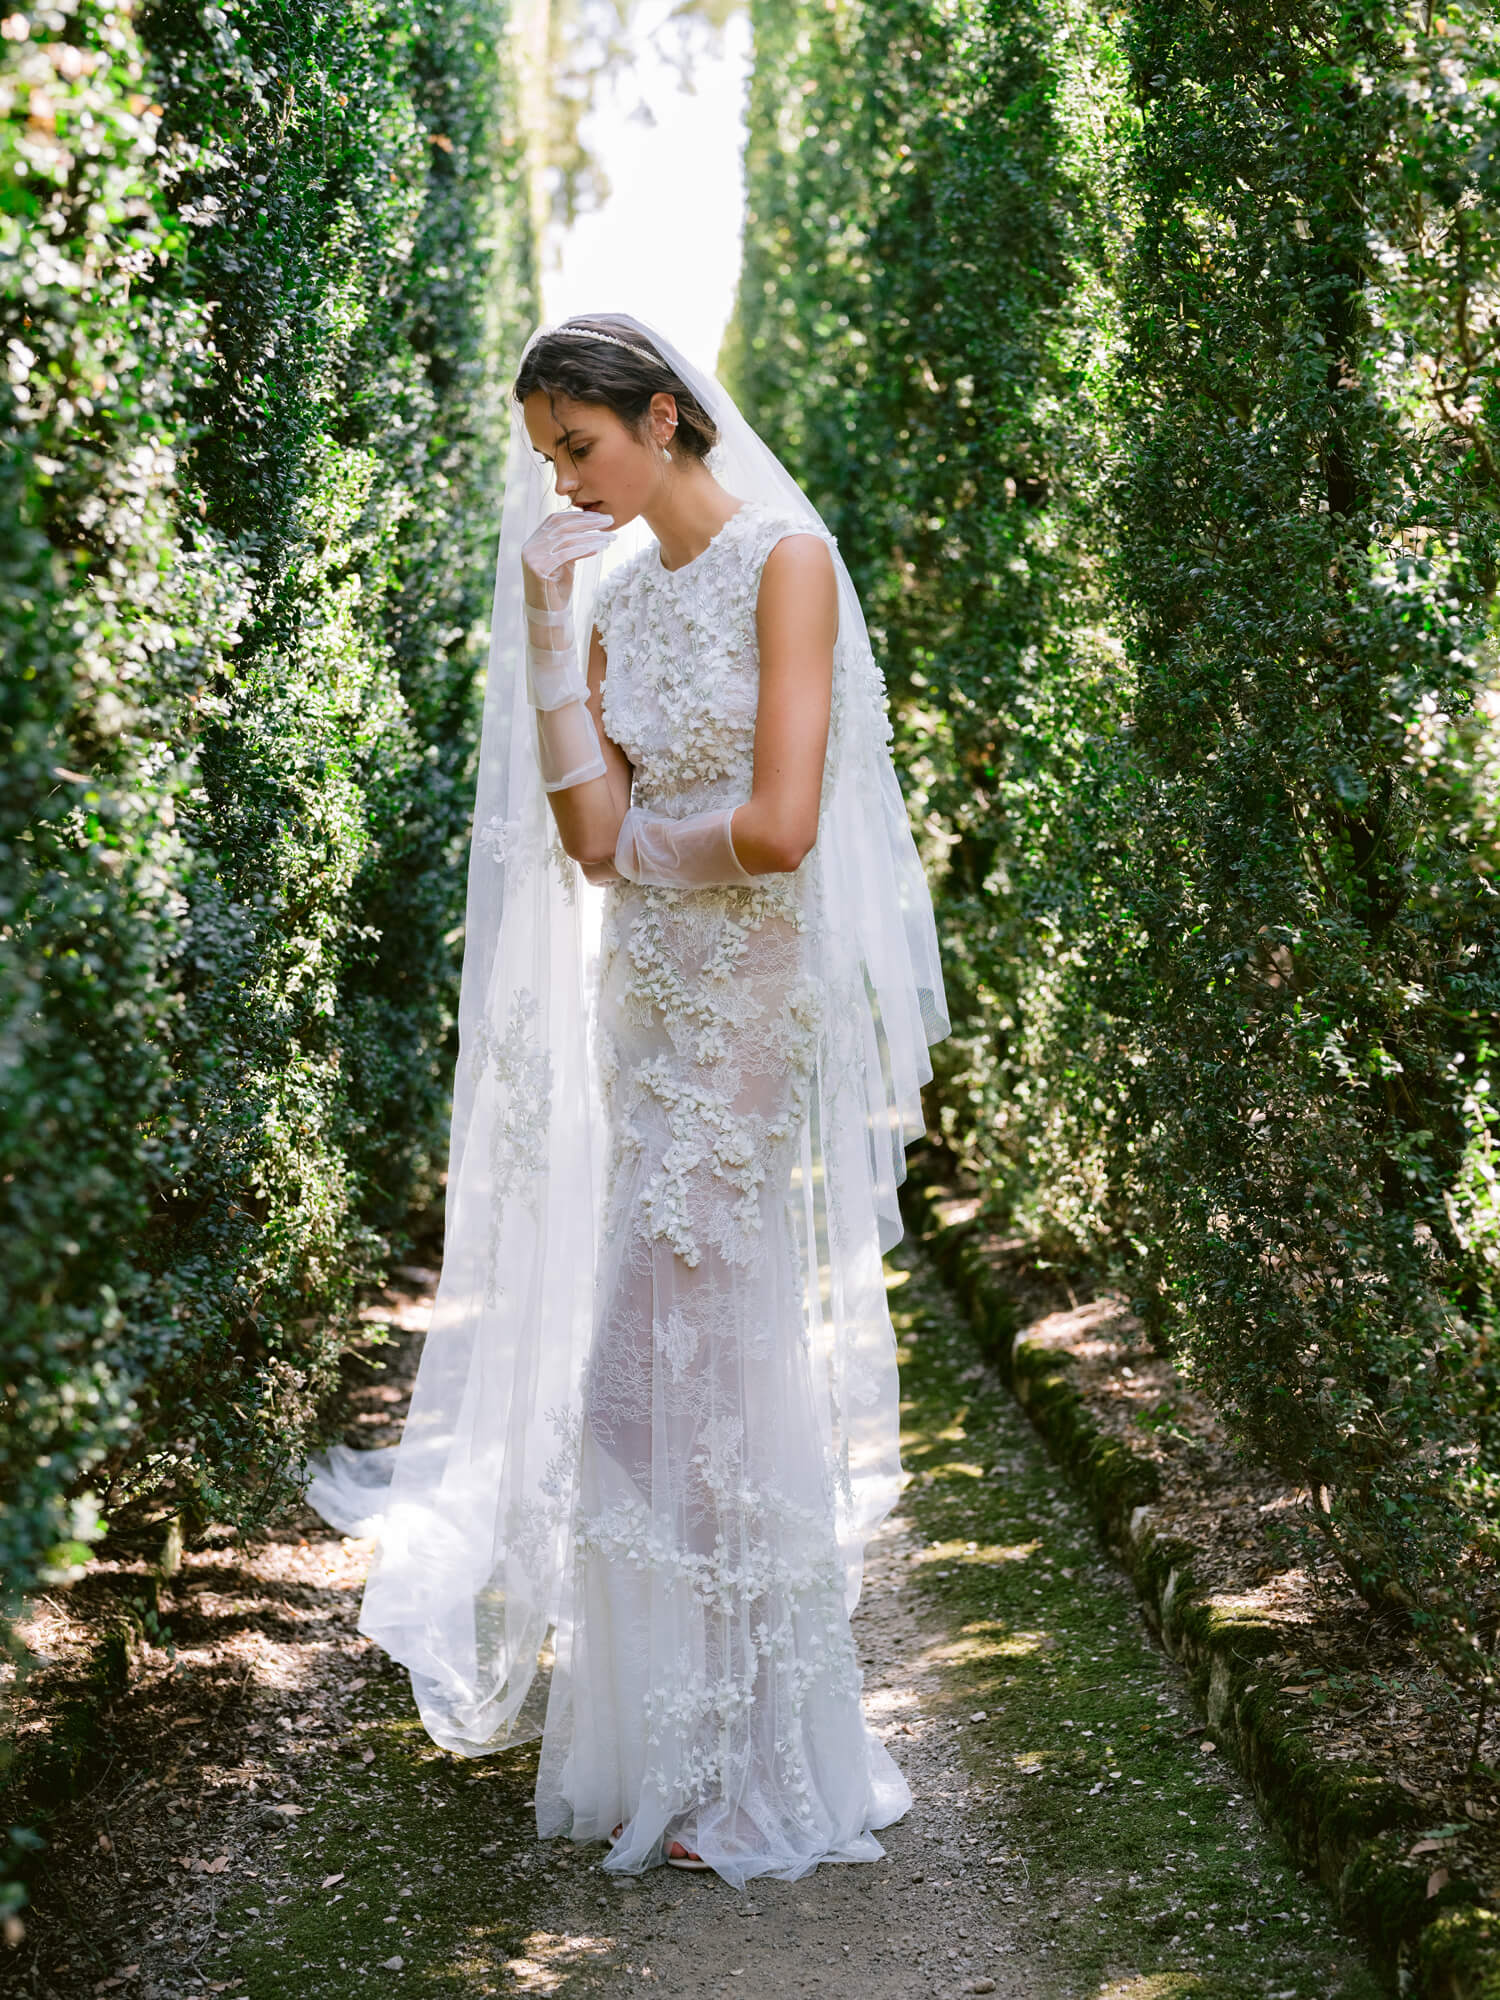 Wedding Dress Lingerie - Shop on Pinterest